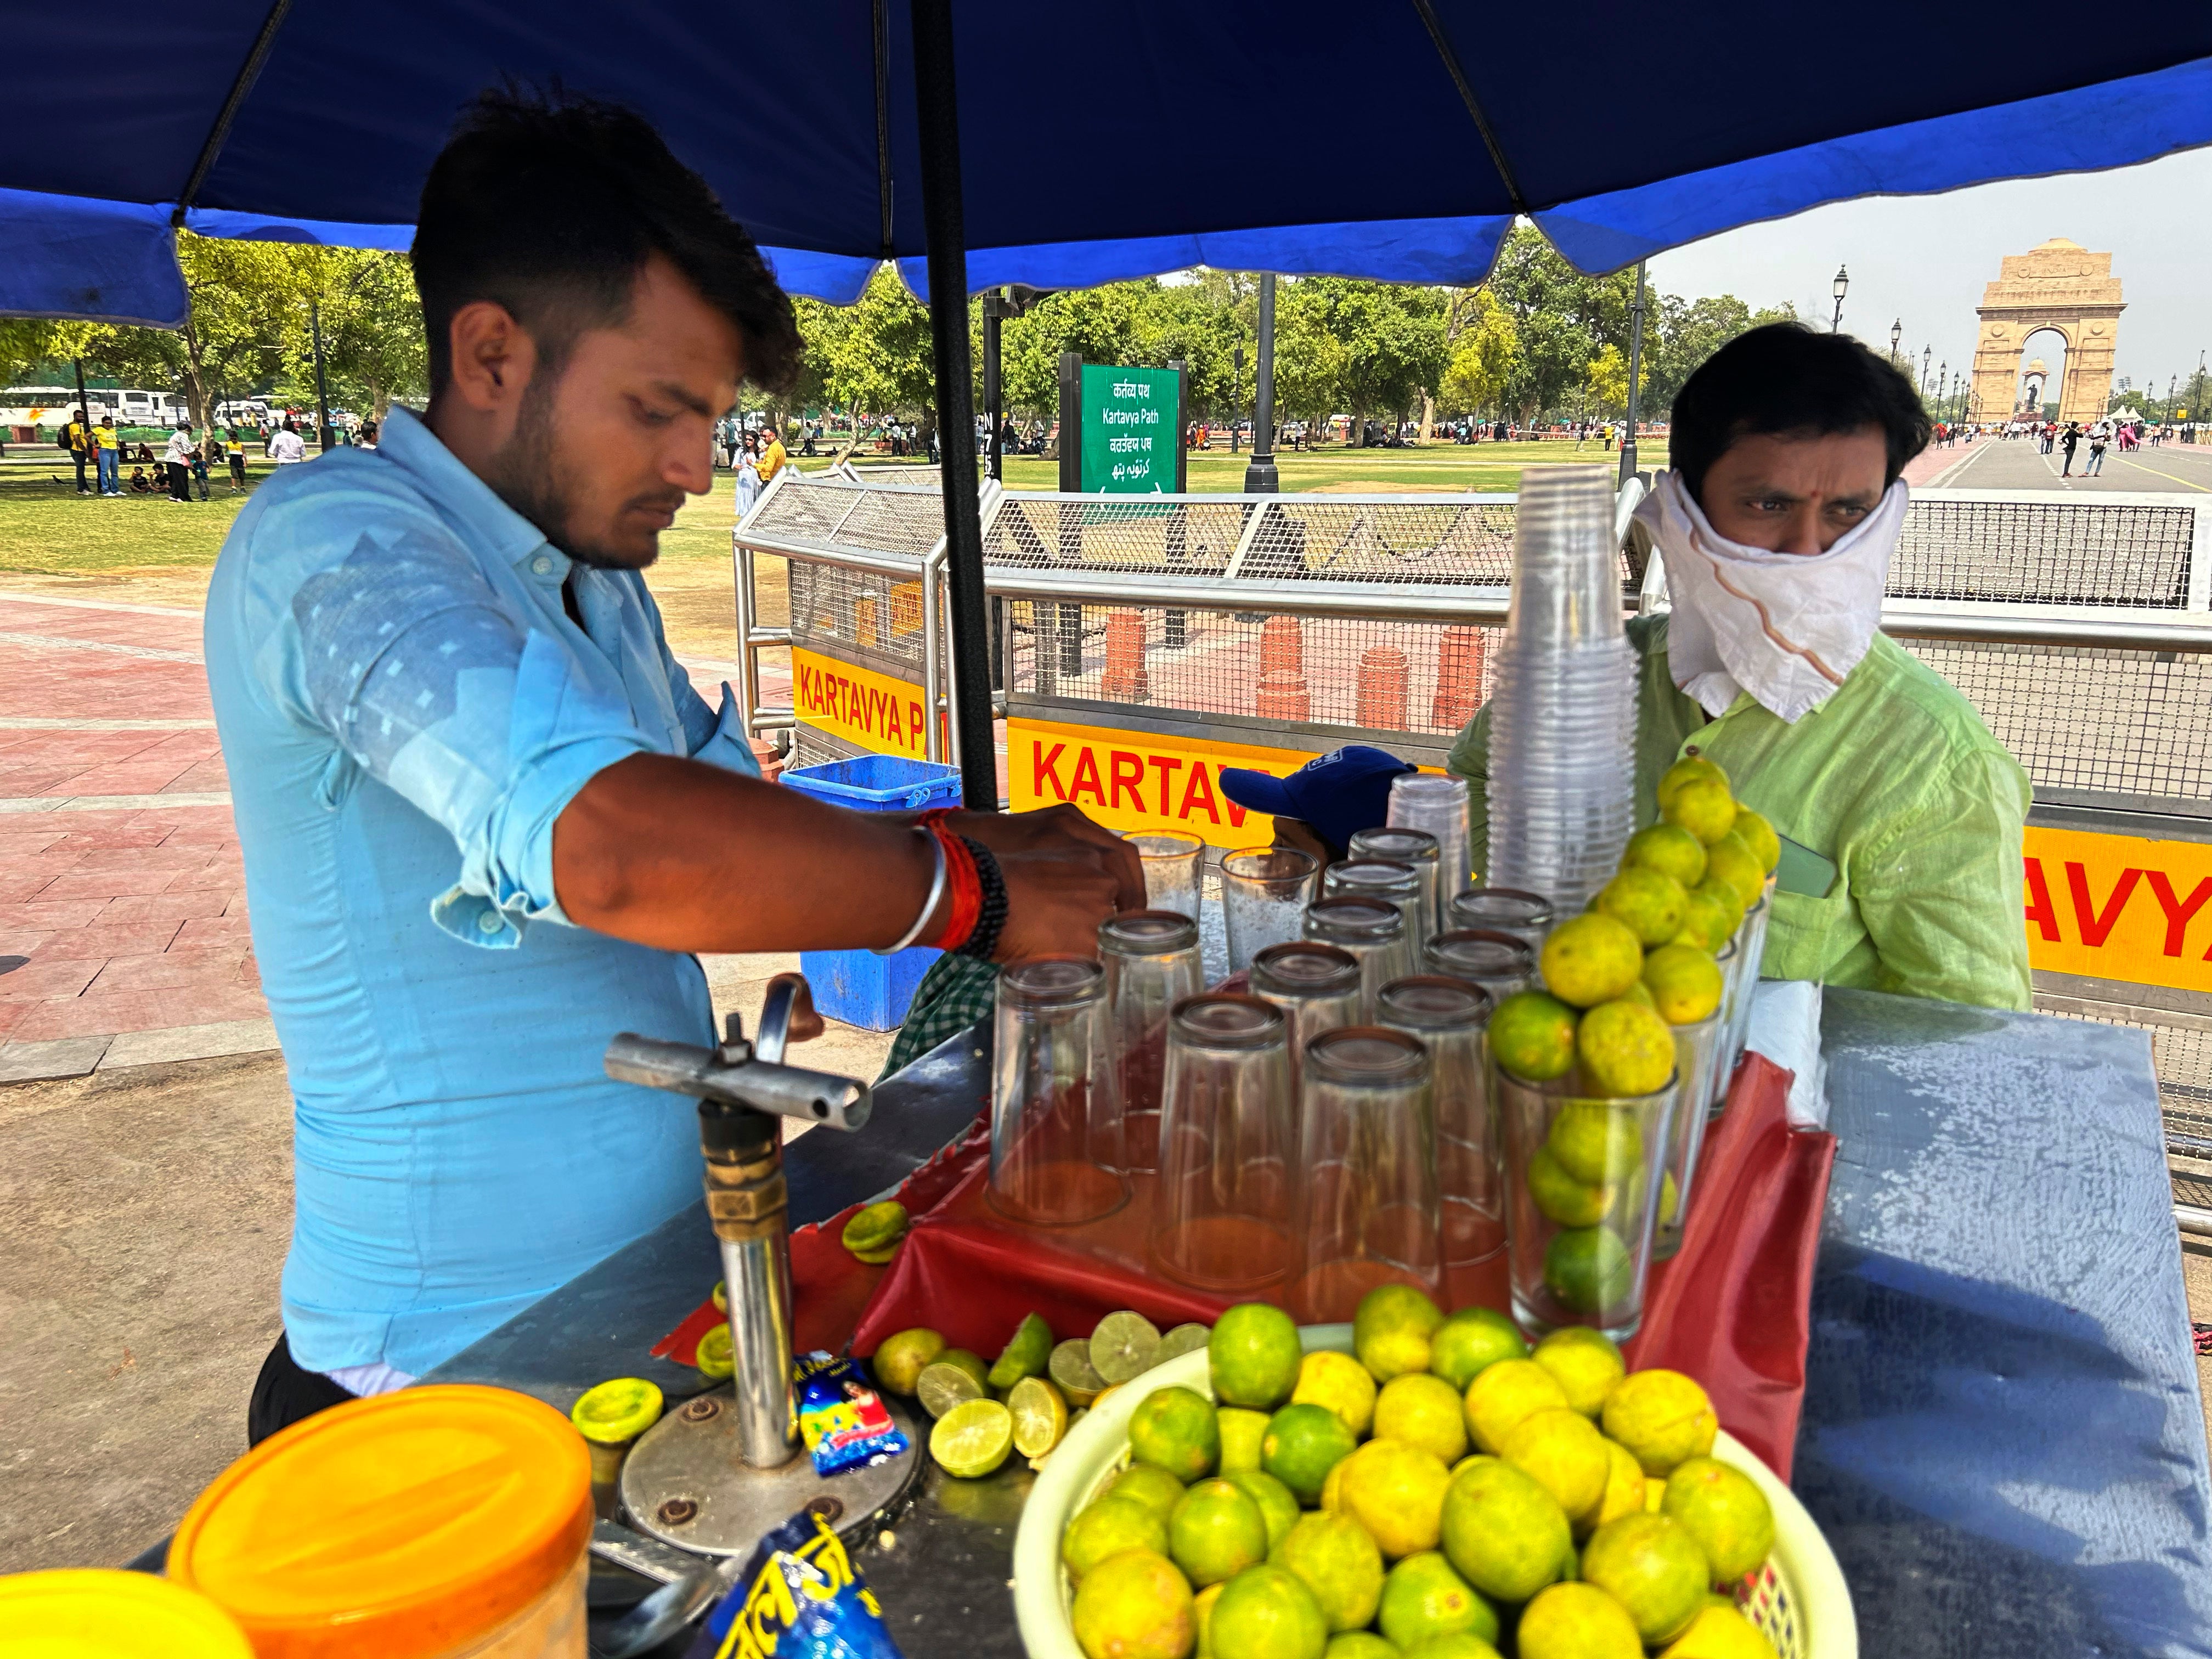 A roadside vendor sells iced lemonade in New Delhi